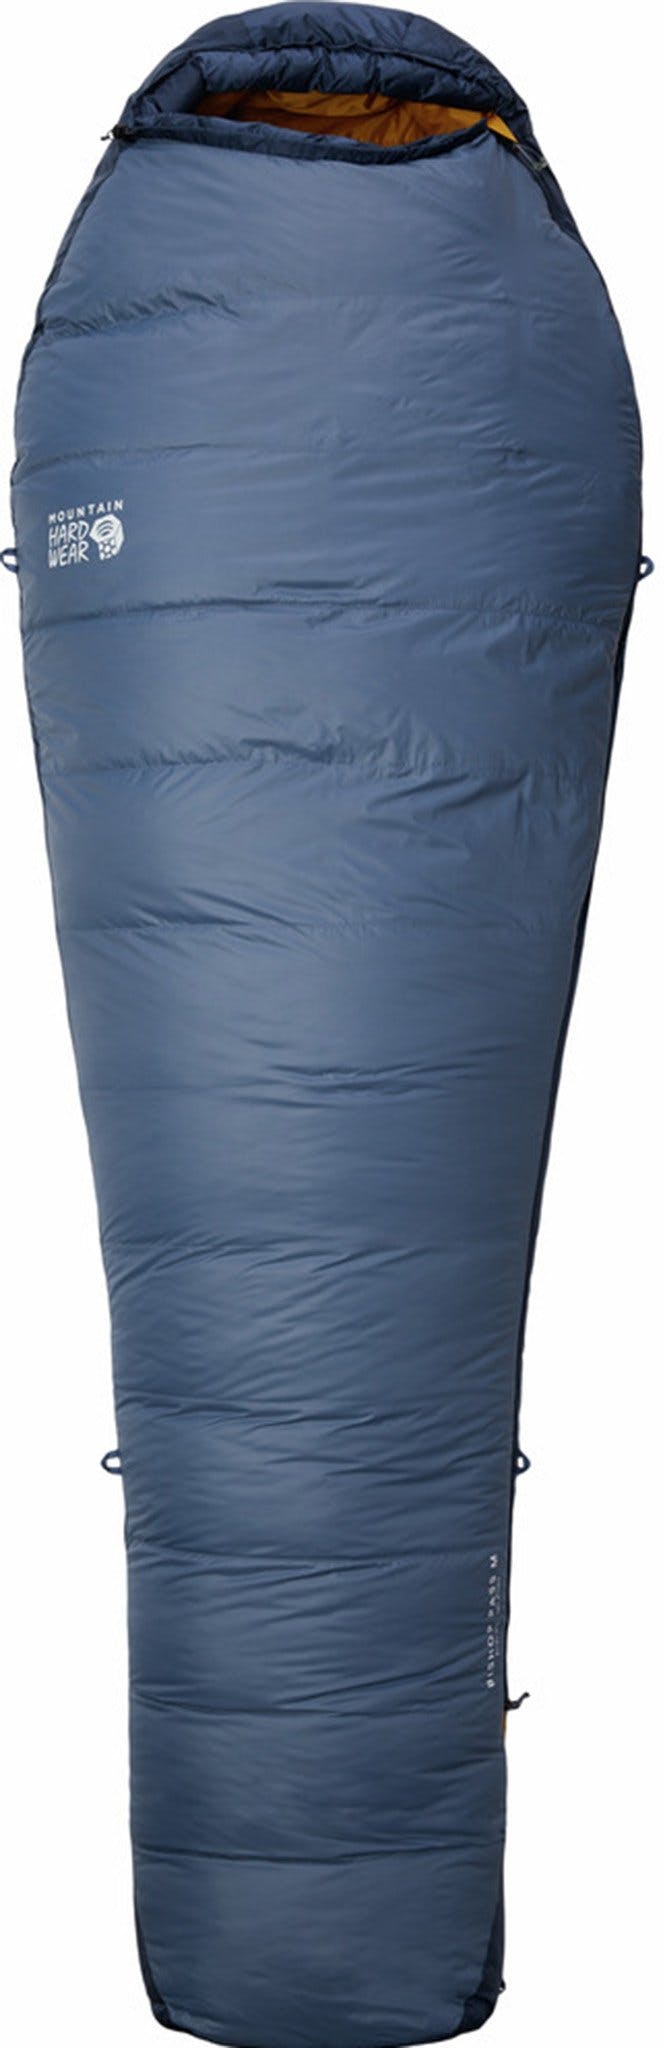 Product image for Bishop Pass 30F/-1C Long Sleeping Bag - Unisex